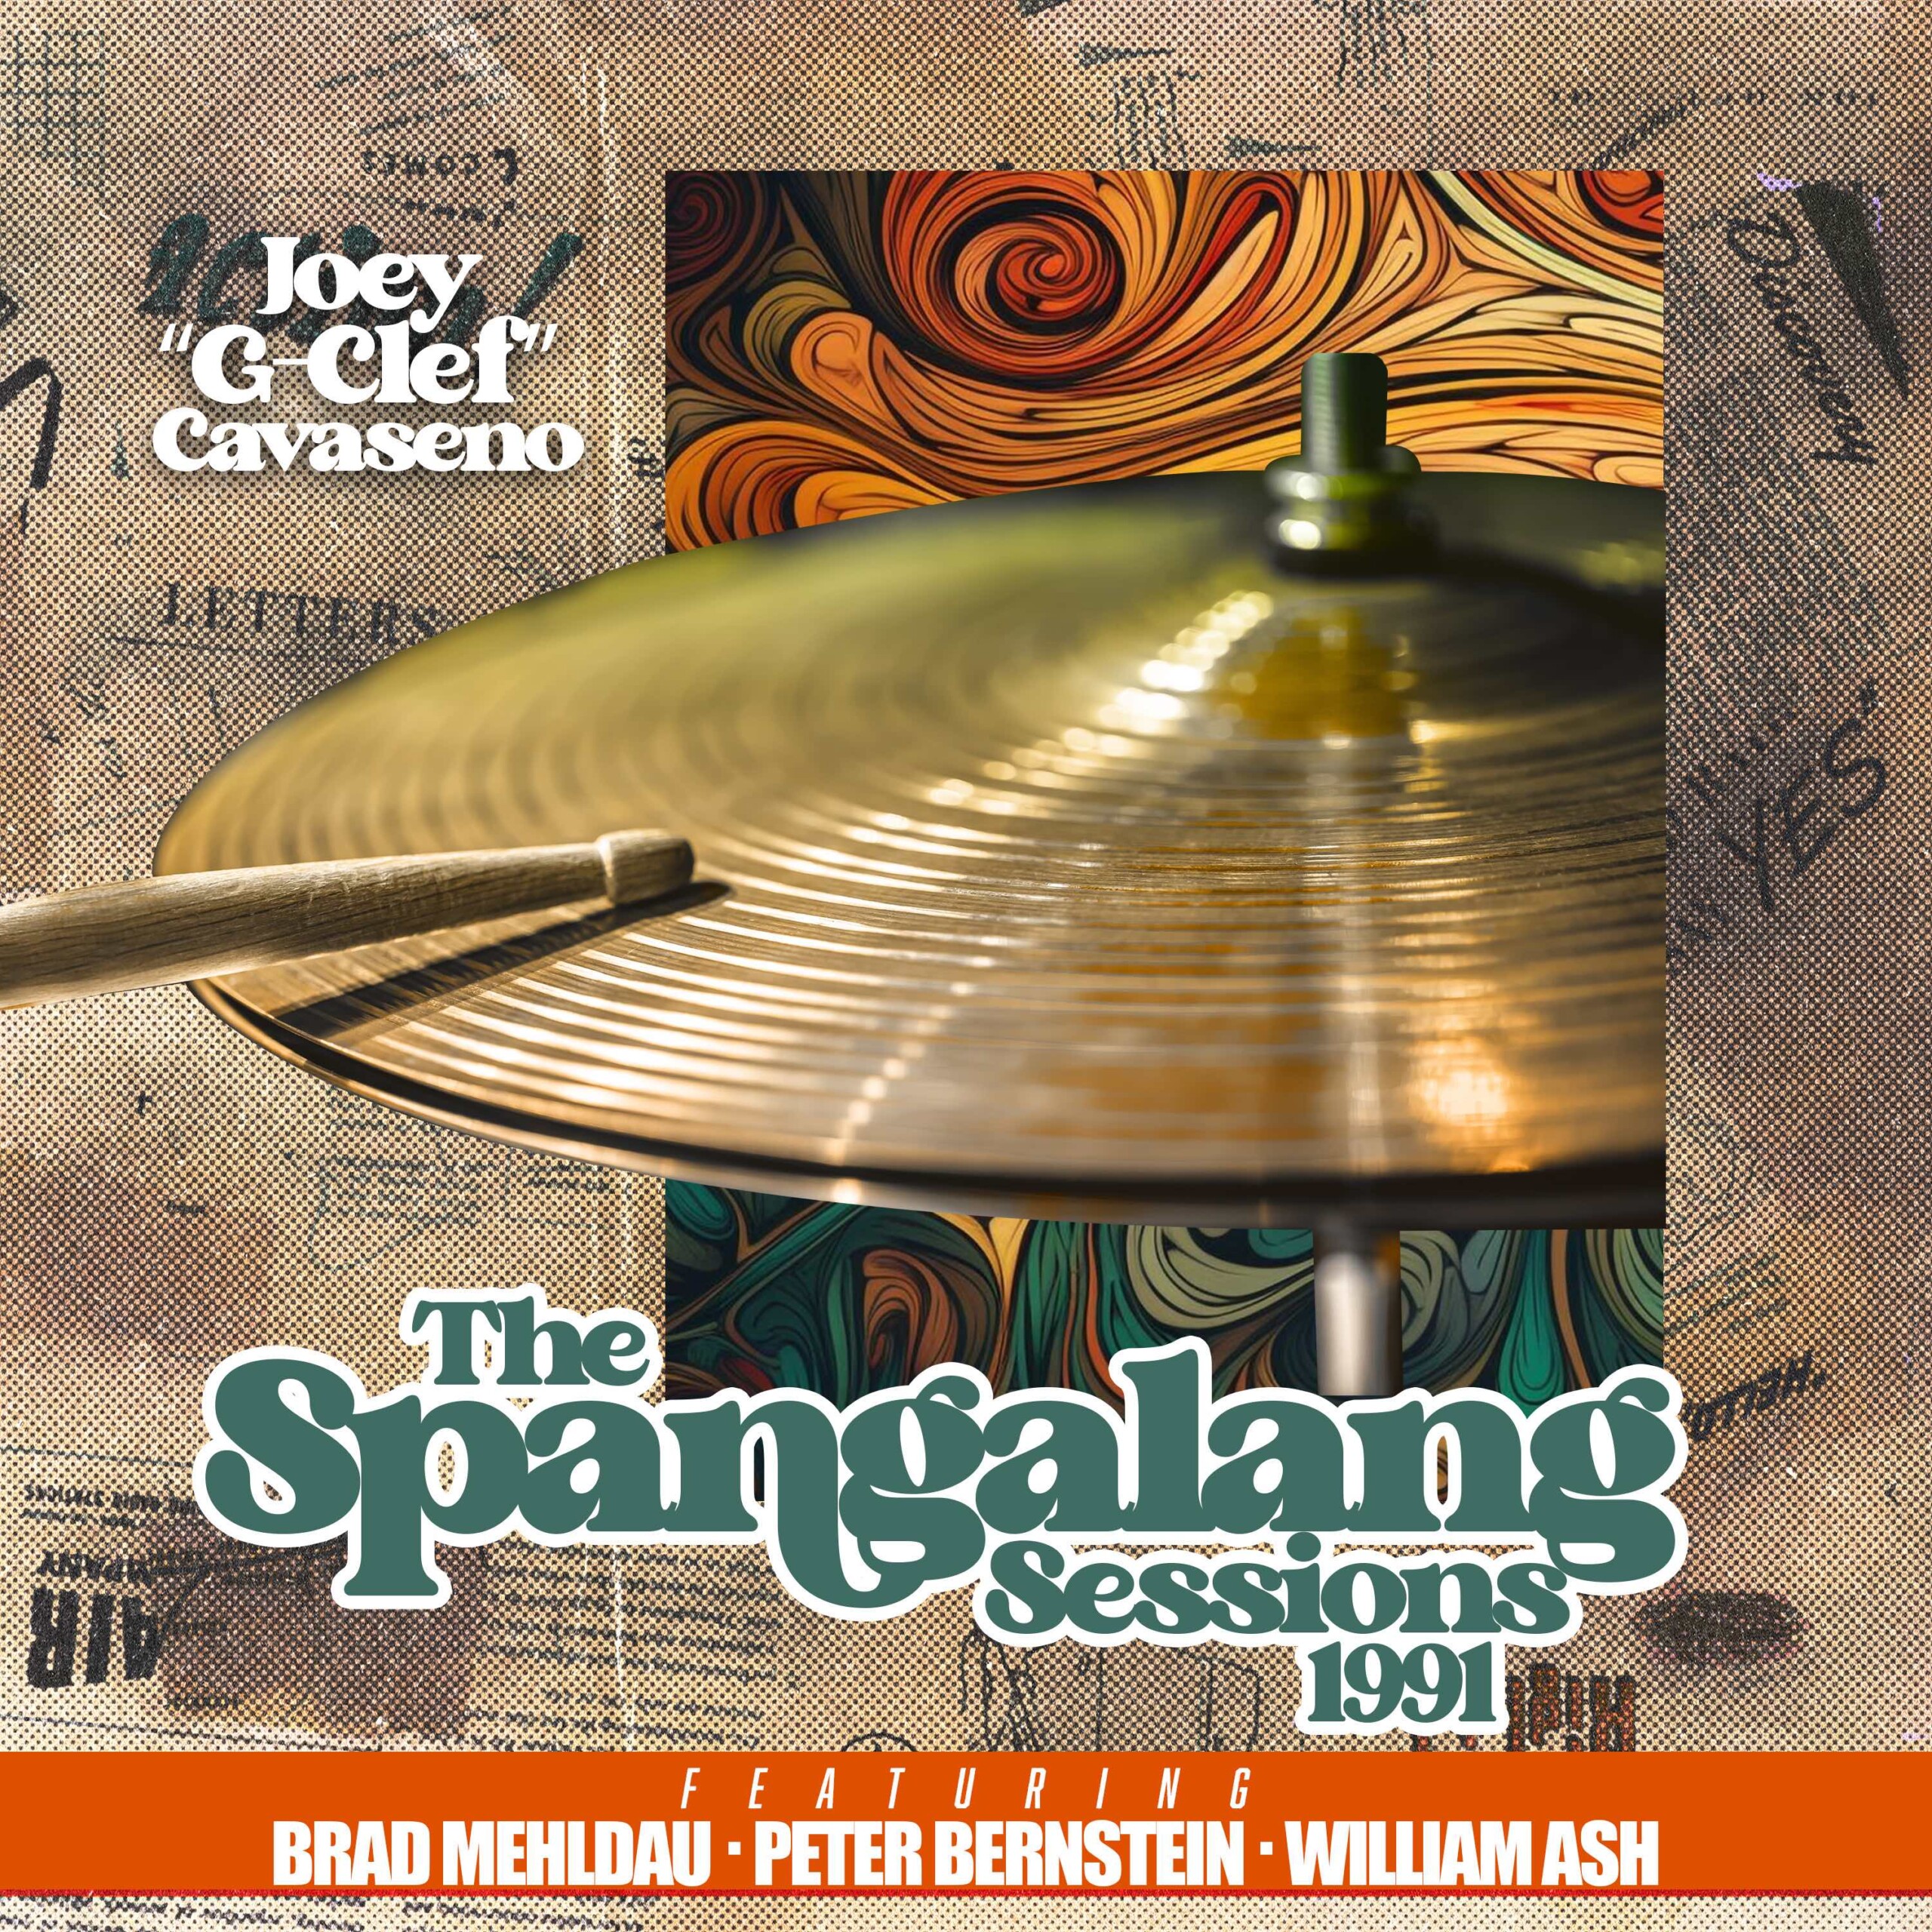 SKJ-3291 Joey “G-Clef” Cavaseno - The Spangalang Sessions 1991 686647329102